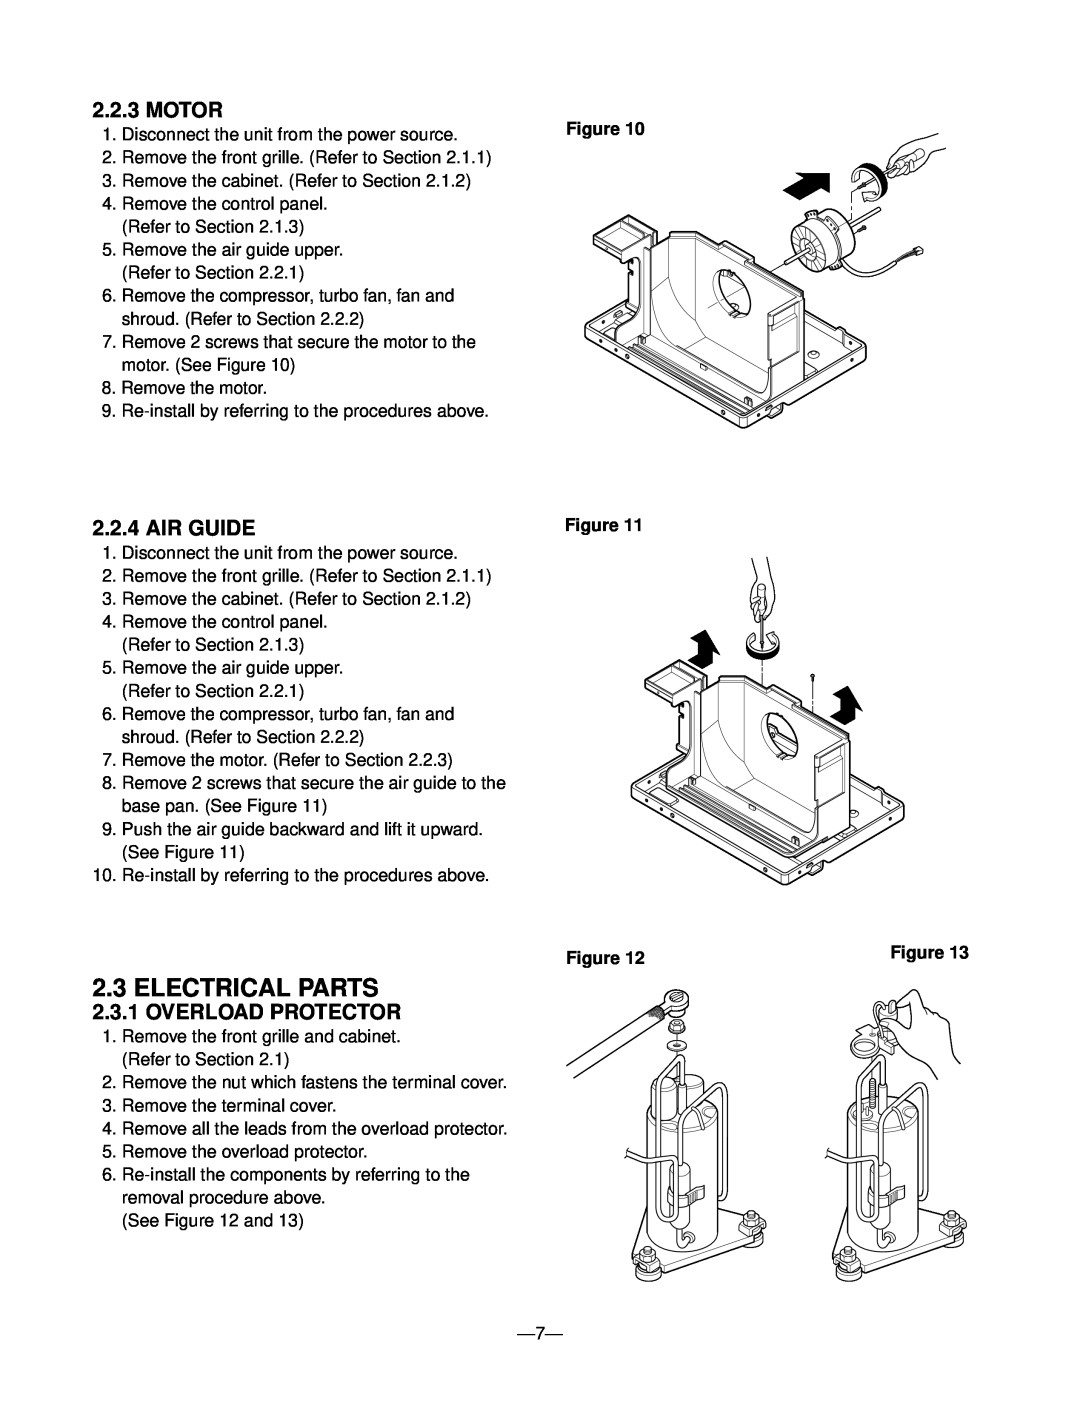 Friedrich ZQ05B10, ZQ07B10 manual 2.3ELECTRICAL PARTS, Motor, Air Guide, Overload Protector, Figure Figure 